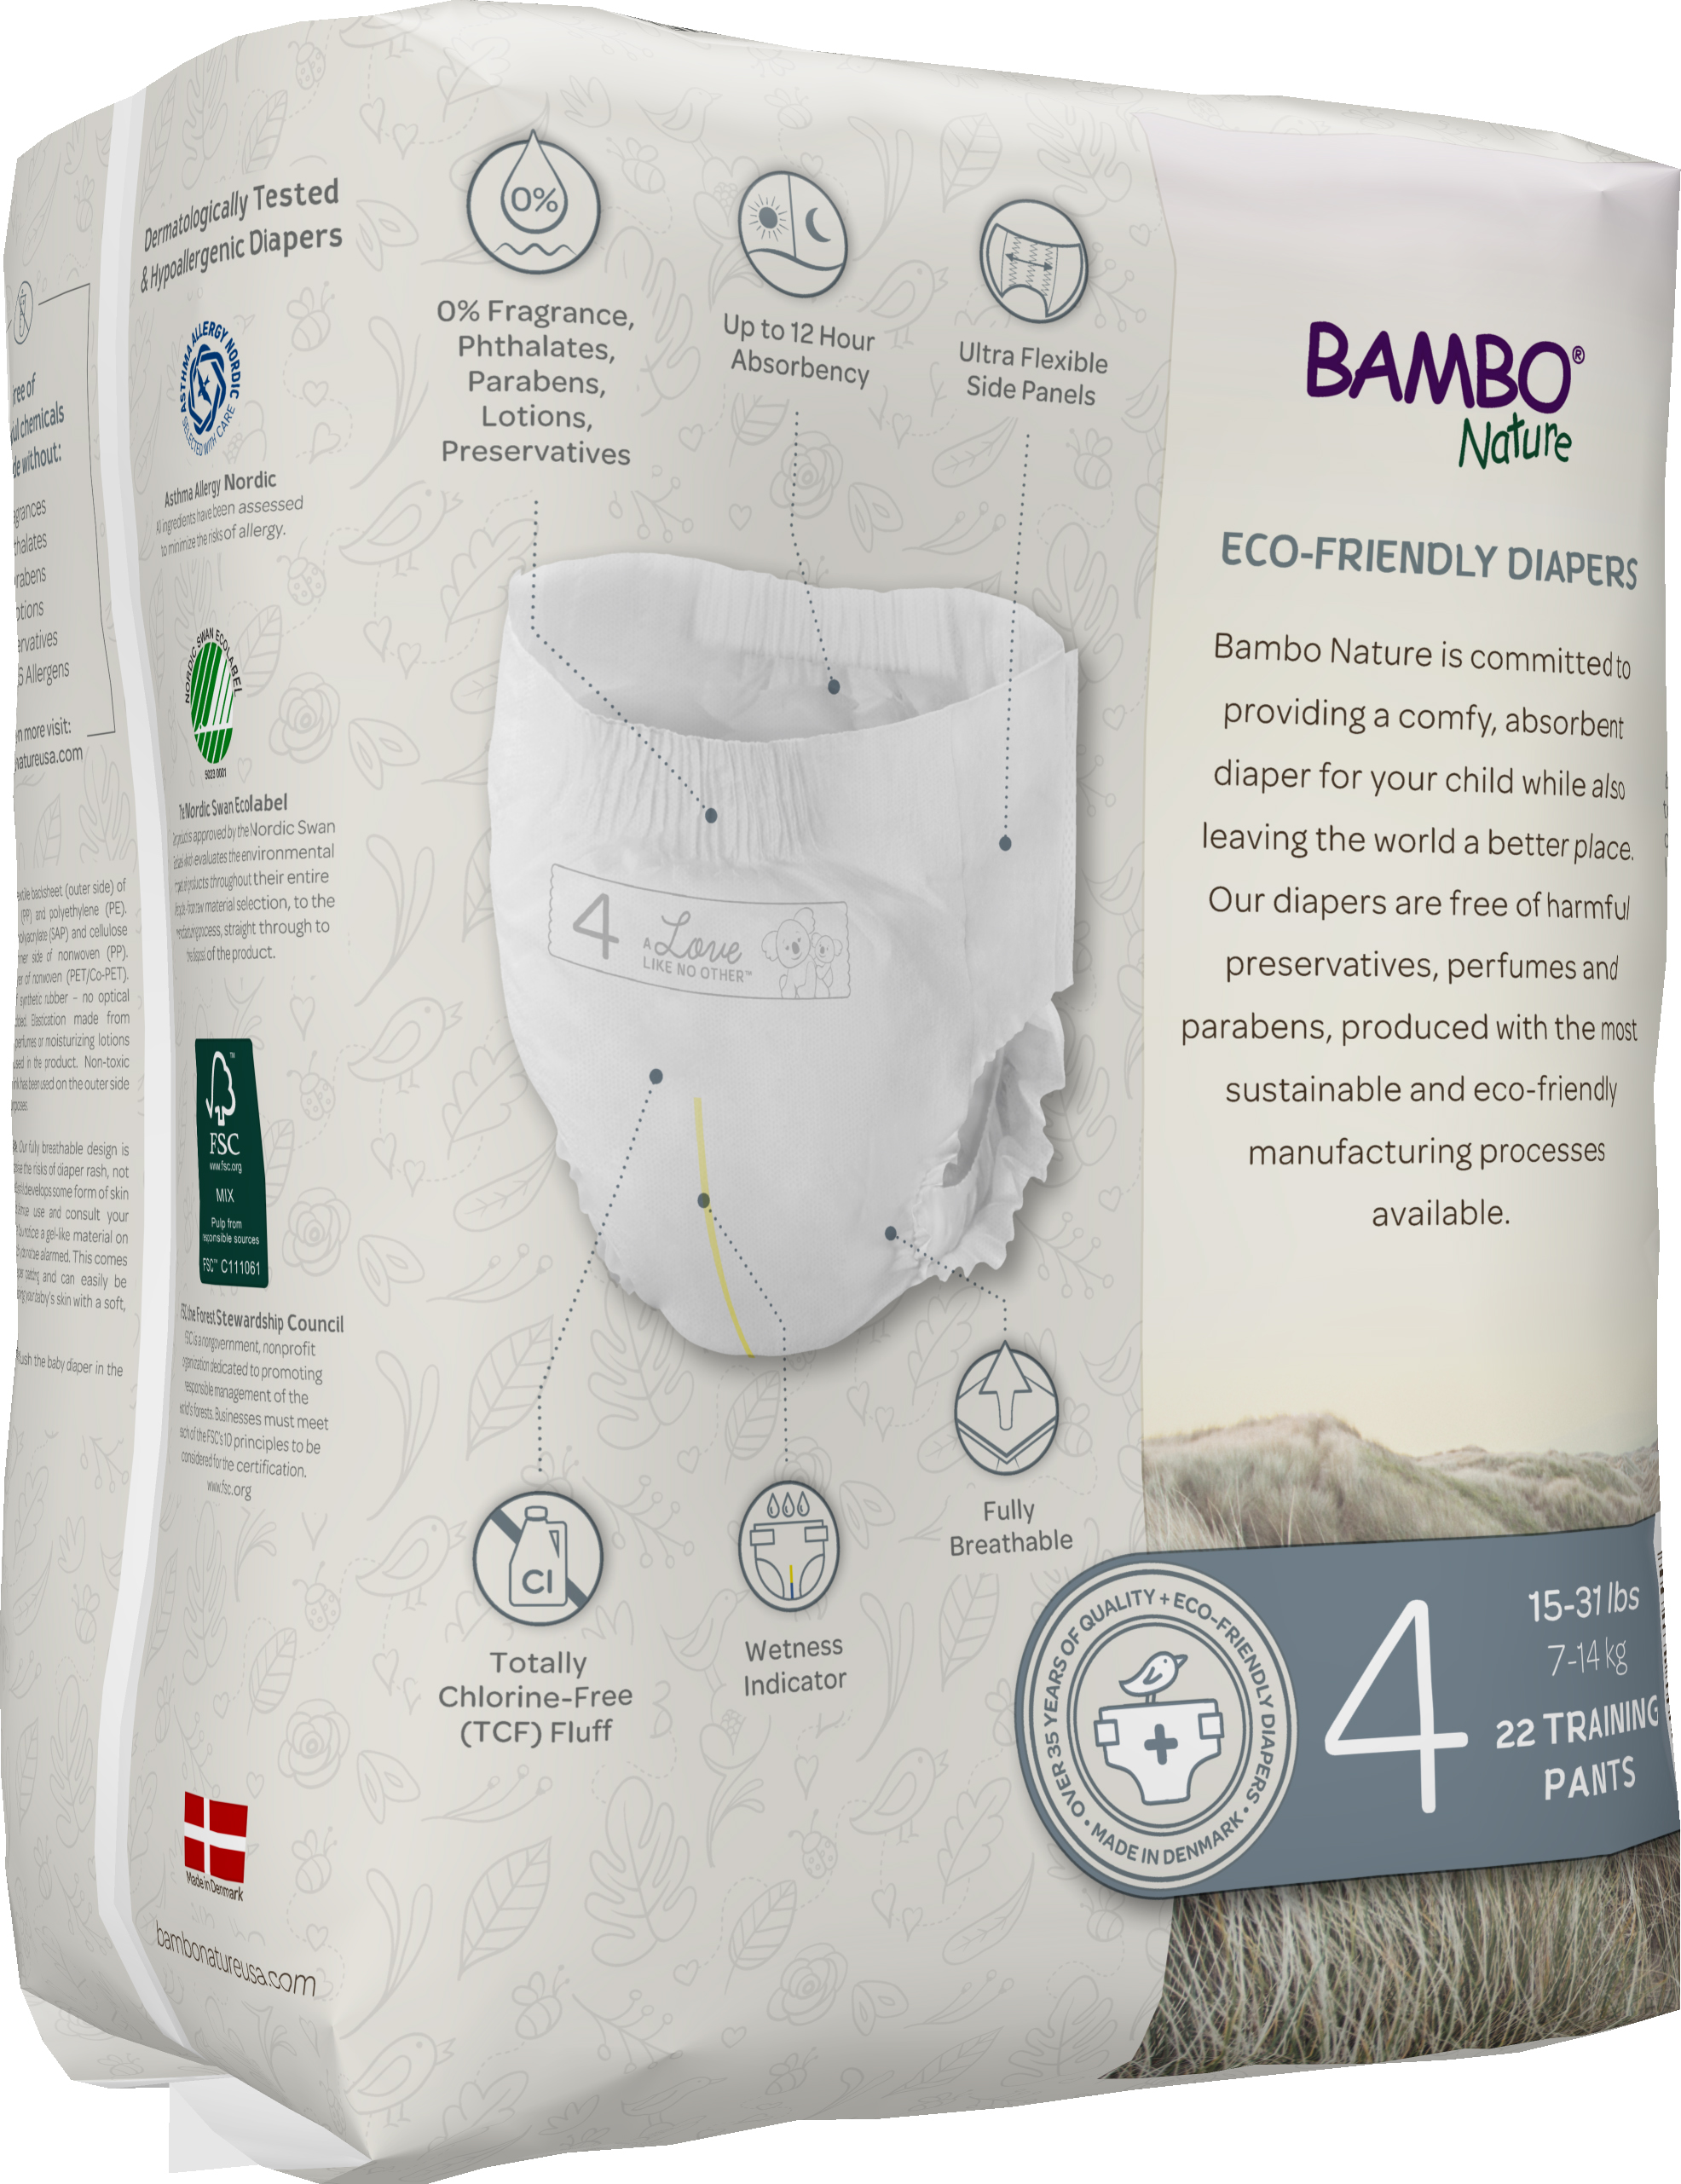 Bambo Nature Dream Baby Training Pants Size 4 / 7-14 kg (22/pk)